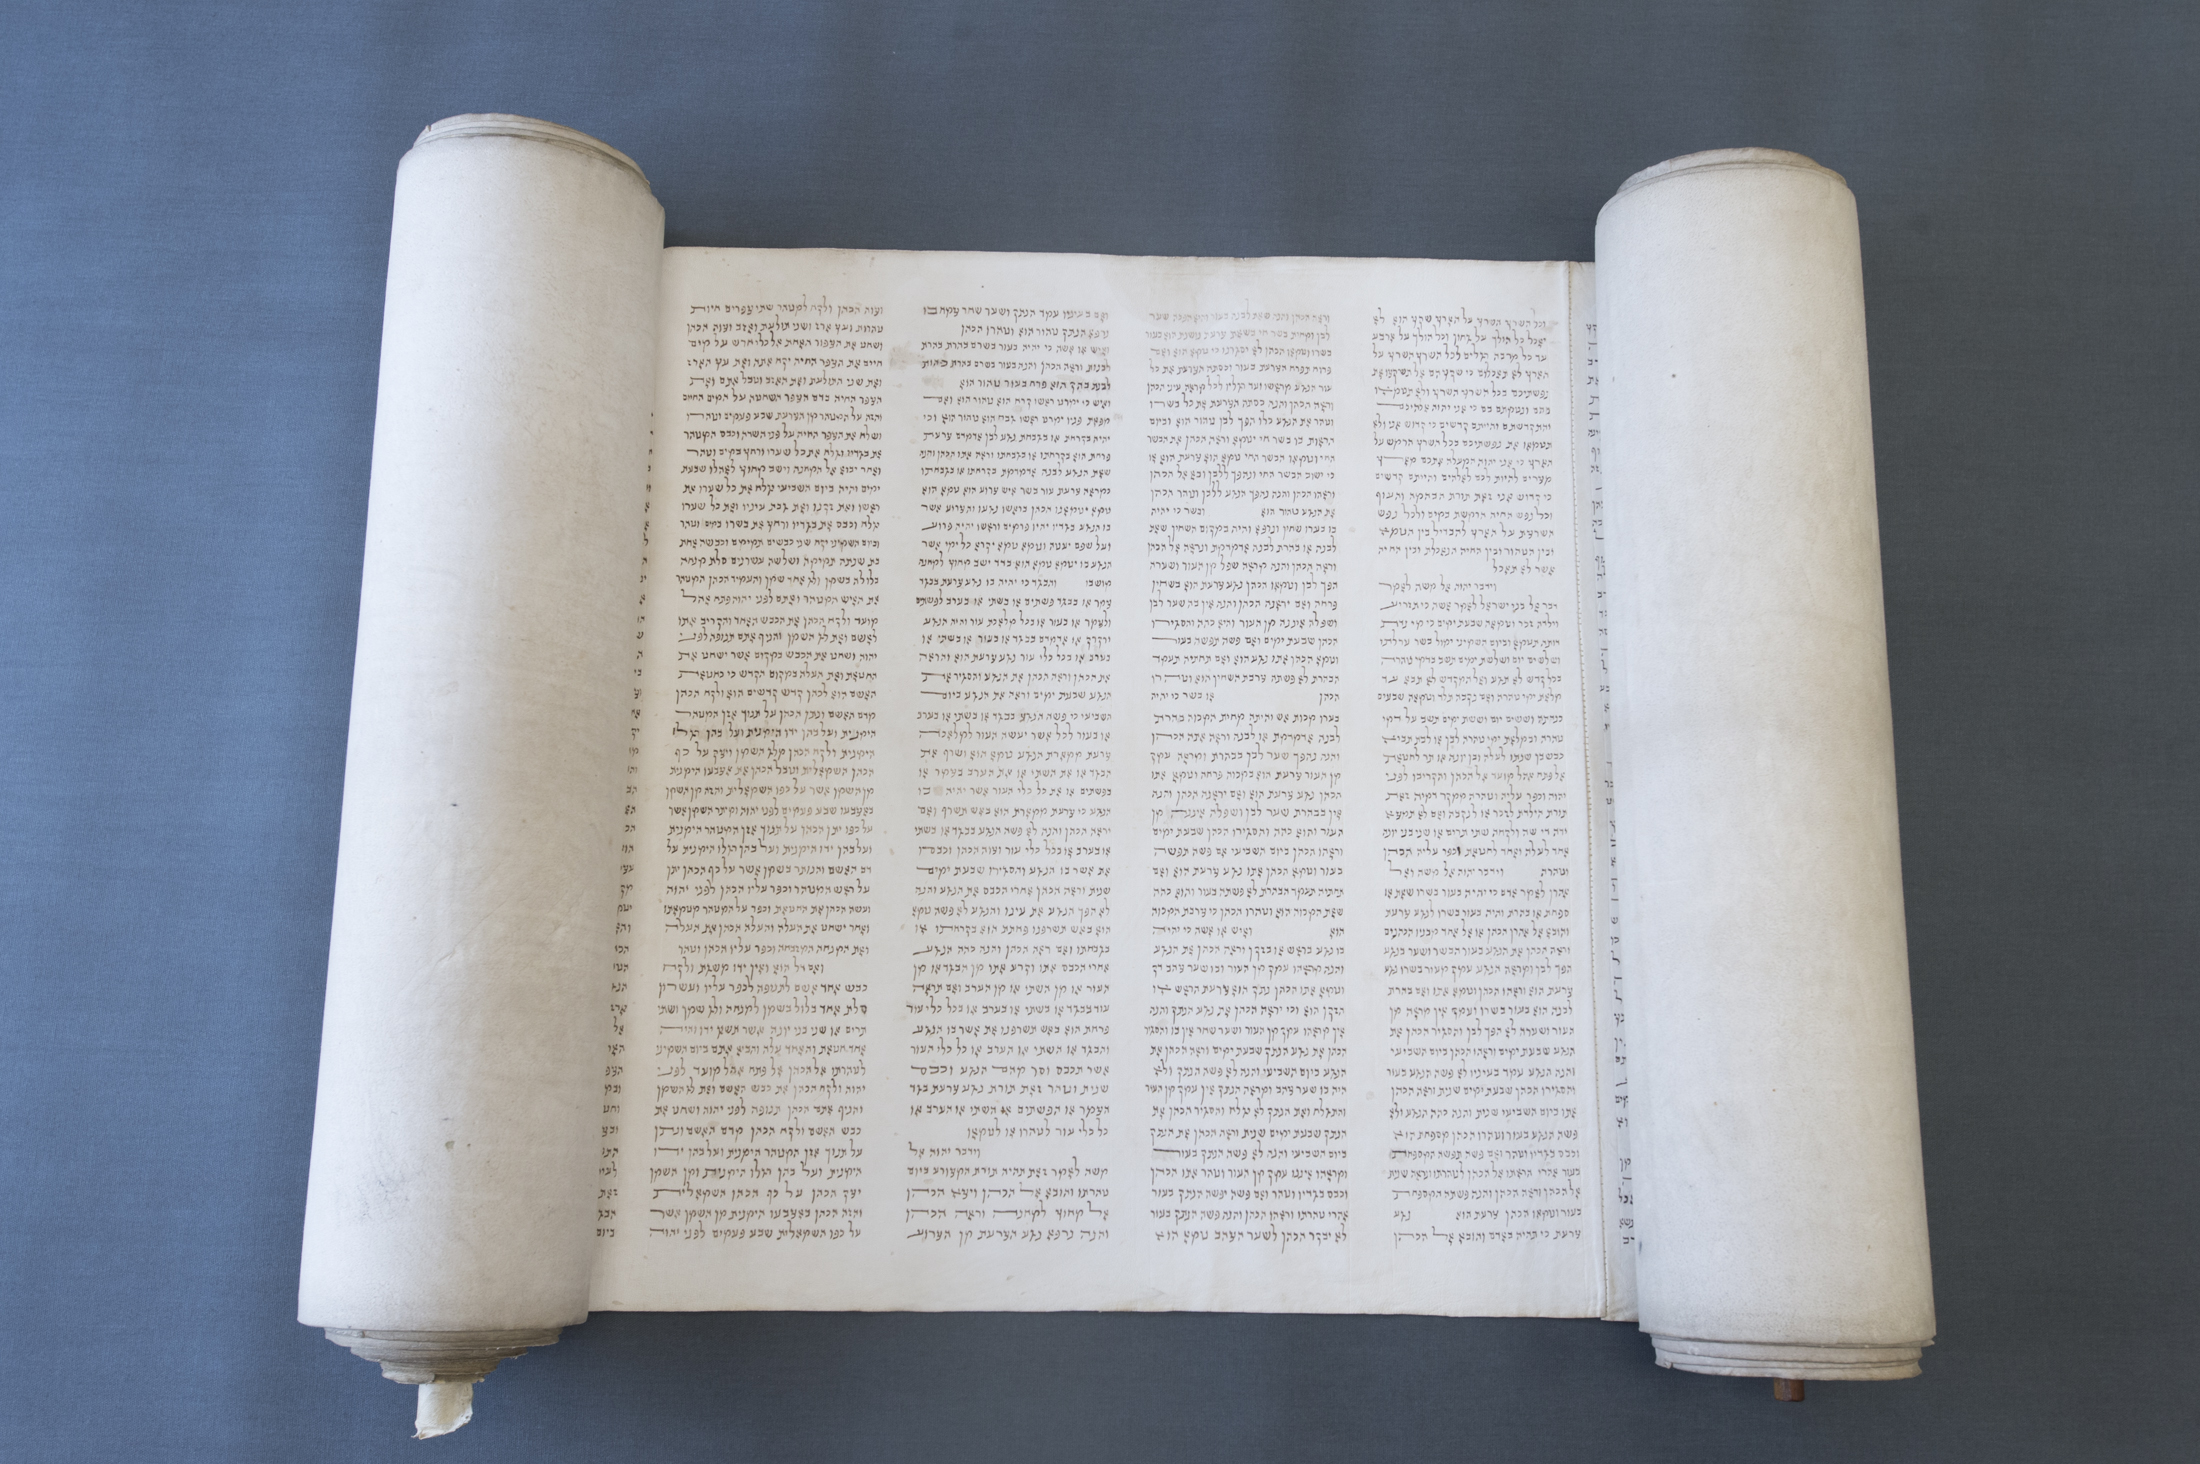 SMU’s Chinese Torah scroll